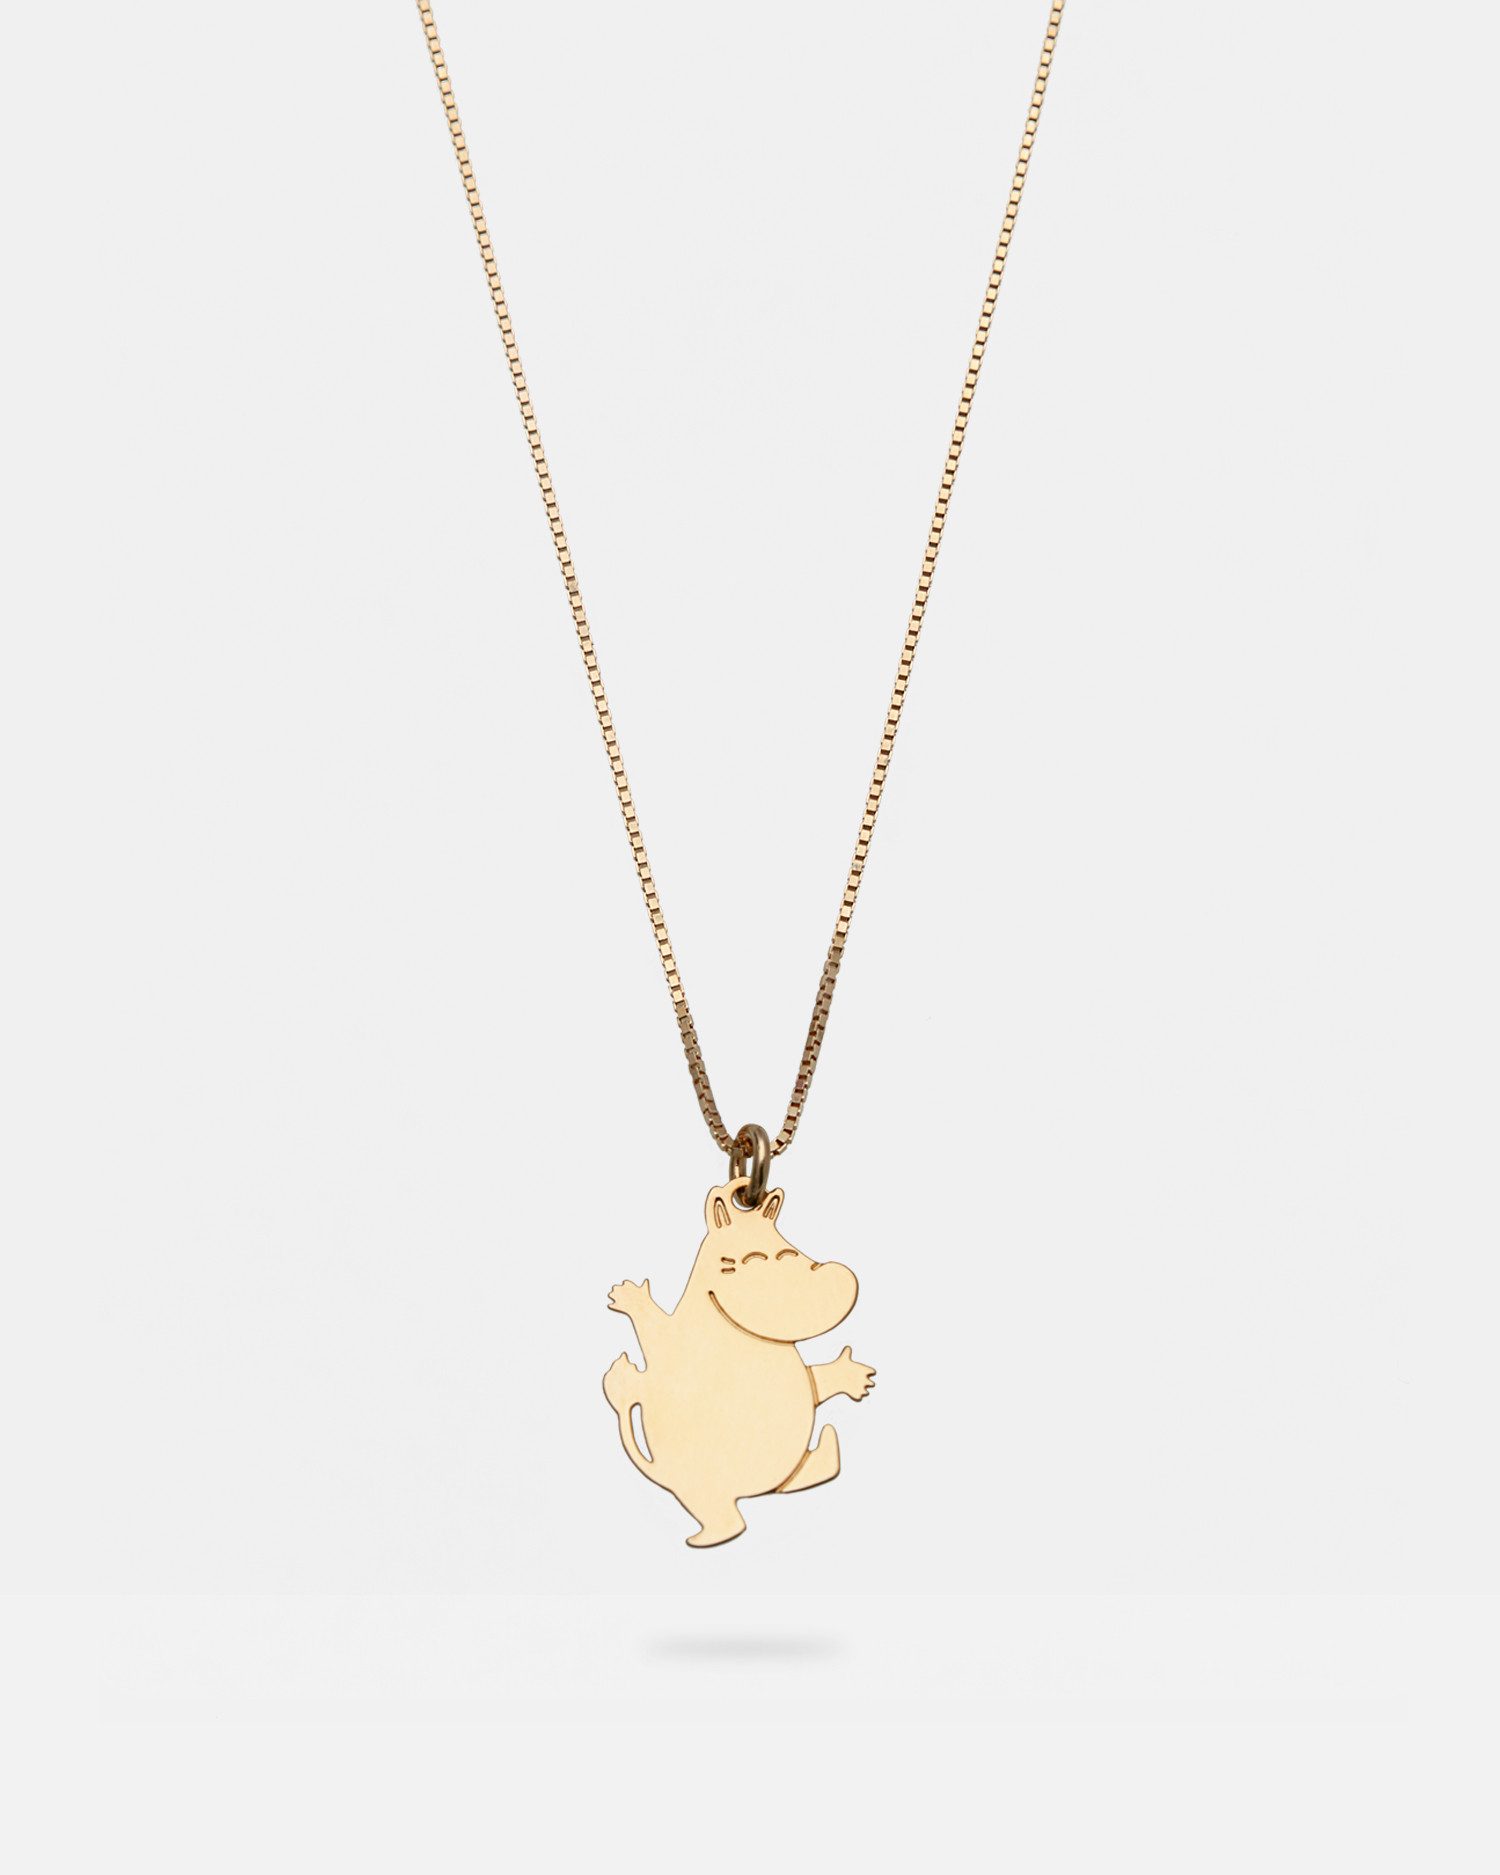 Malaika Raiss Kette mit Anhänger Jumping Moomin Halskette Damen Gold mit springender Moomin Figur 45 cm, Silber 925, 24 Karat vergoldet